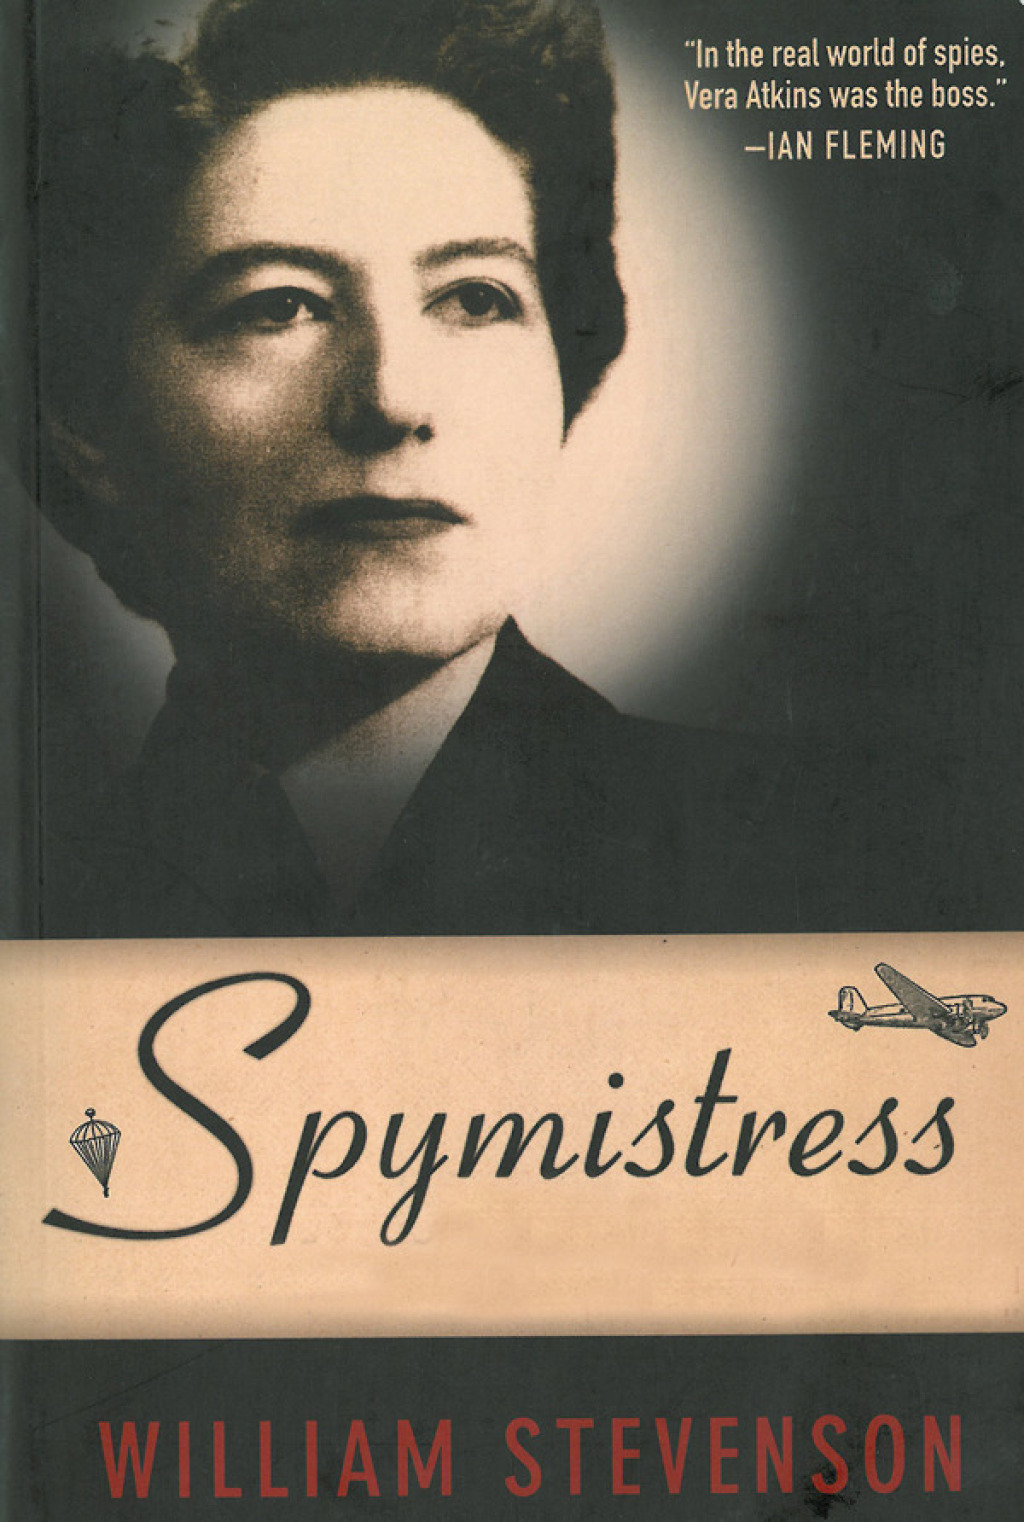 Spymistress: The True Story of the Greatest Female Secret Agent of World War II William Stevenson Author